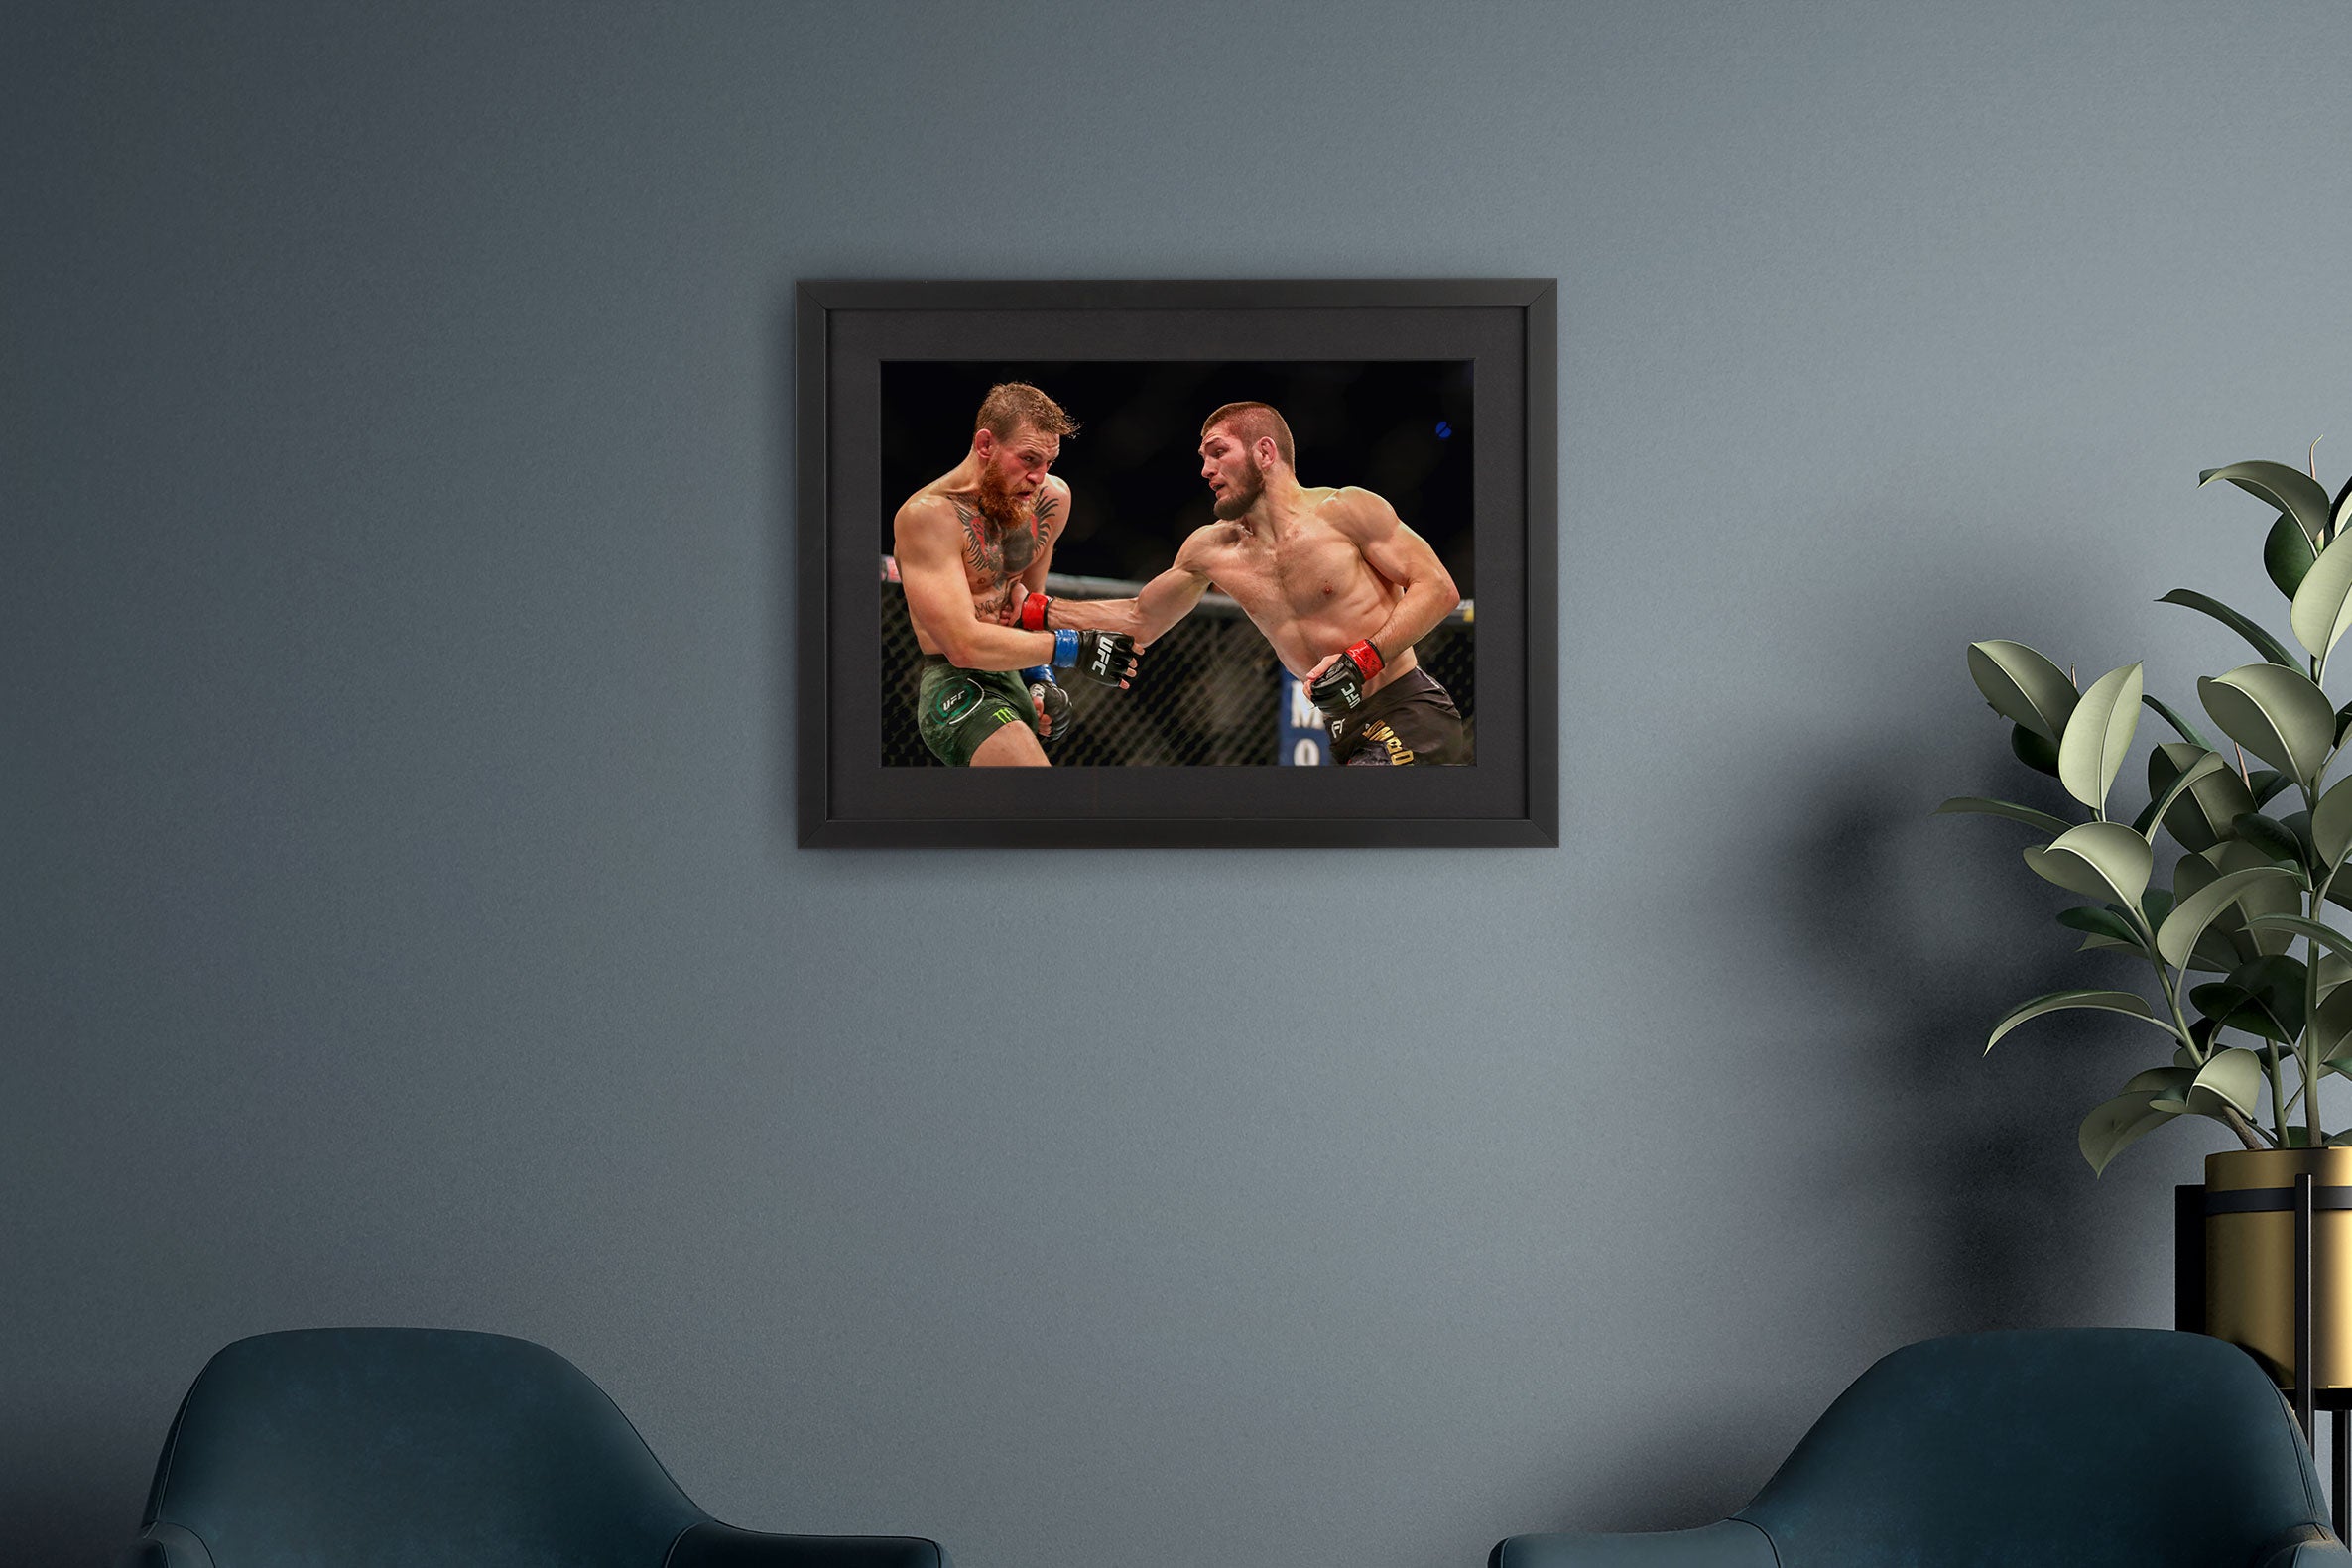 Khabib vs McGregor Framed Photo - UFC 229: Khabib vs McGregor